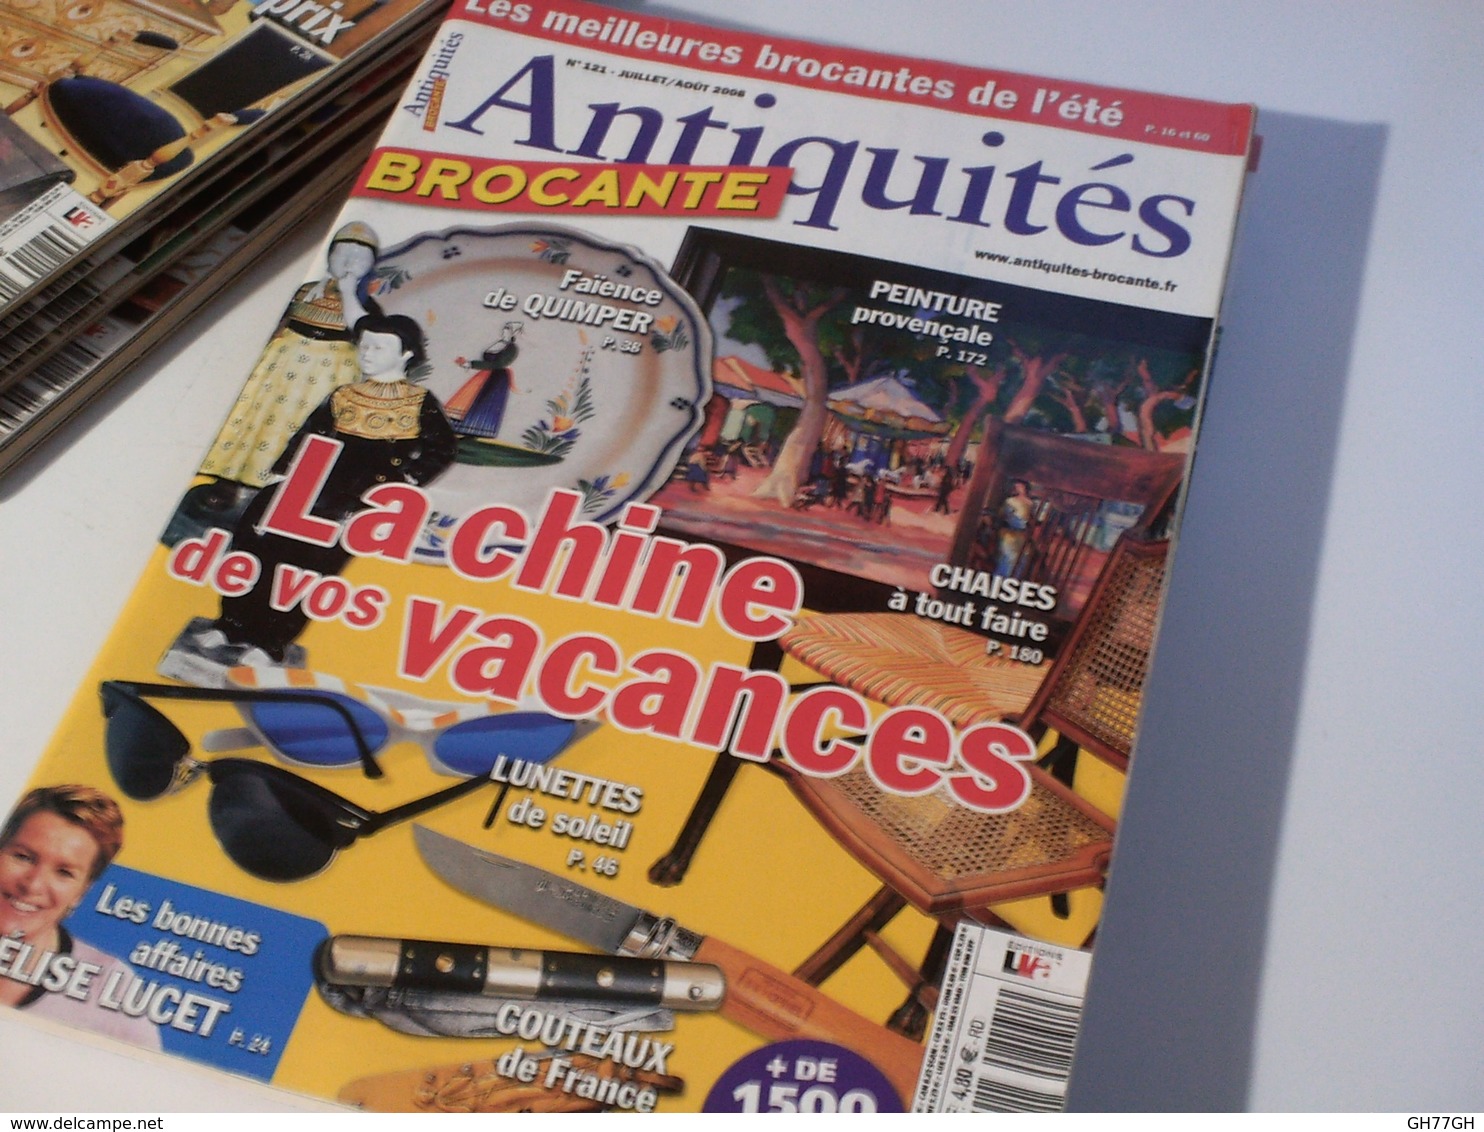 Revues "Antiquités Brocante" -année 2008 complète -11 numéros -french newspaper about antiquities -11 editions from 2009